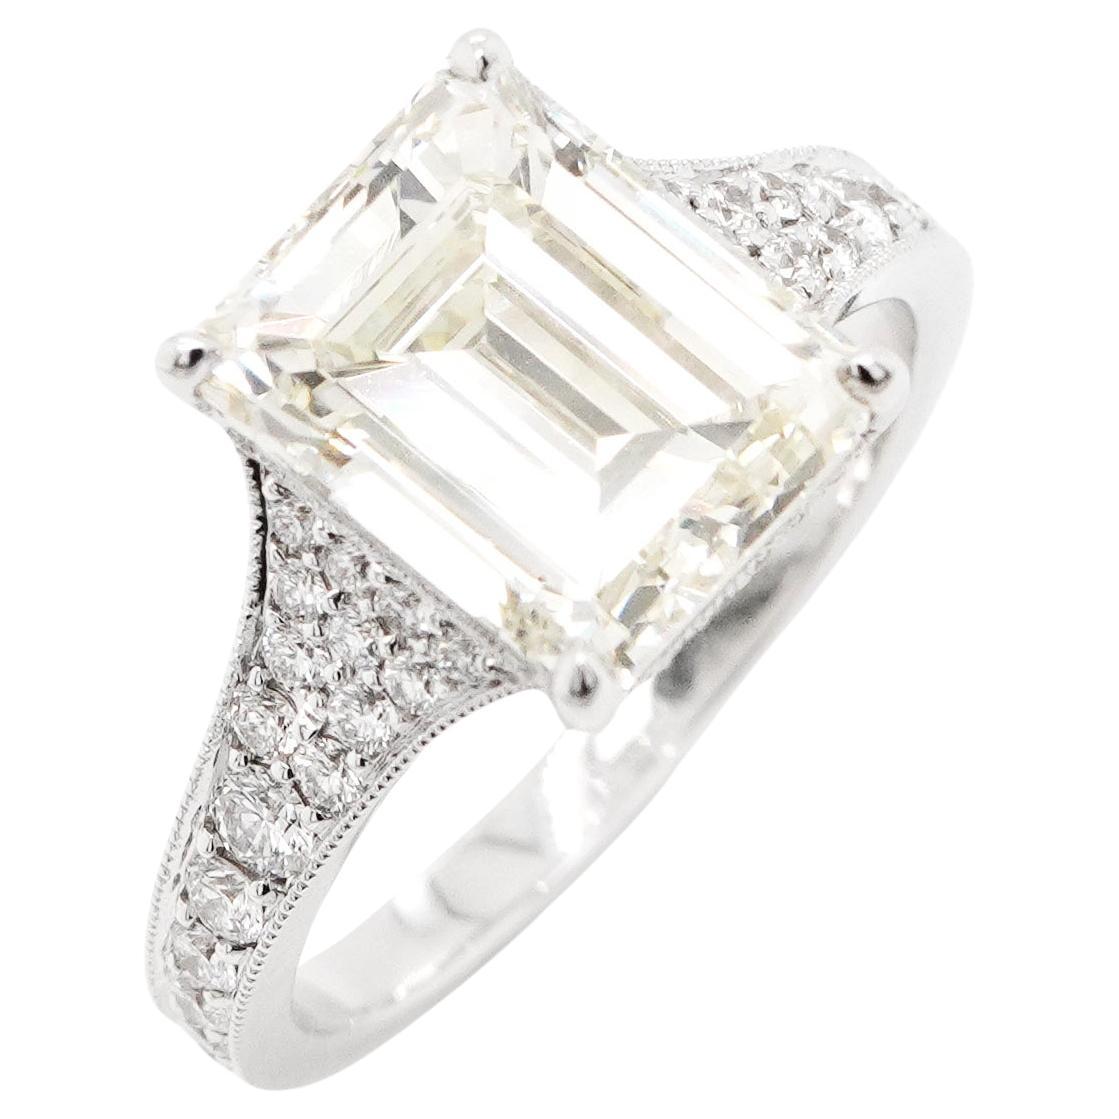 BENJAMIN FINE JEWELRY 3.44 cts Diamond 18K Ring For Sale